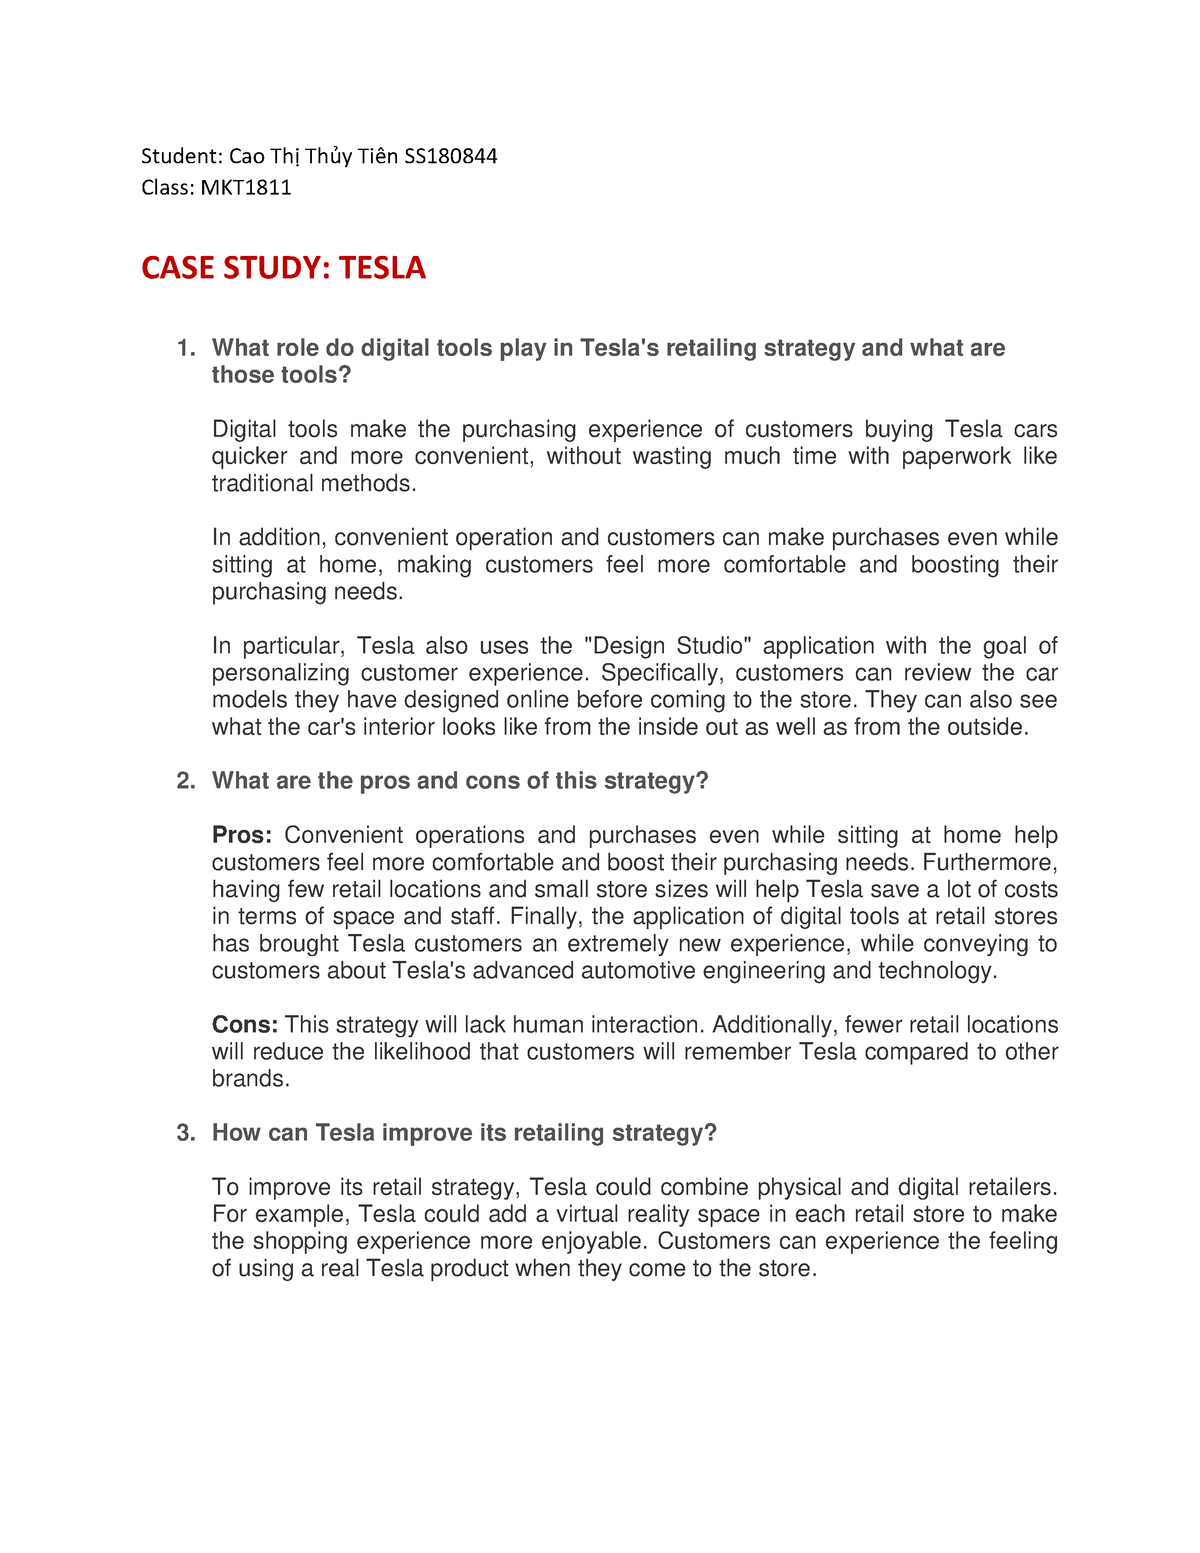 case study tesla assignment